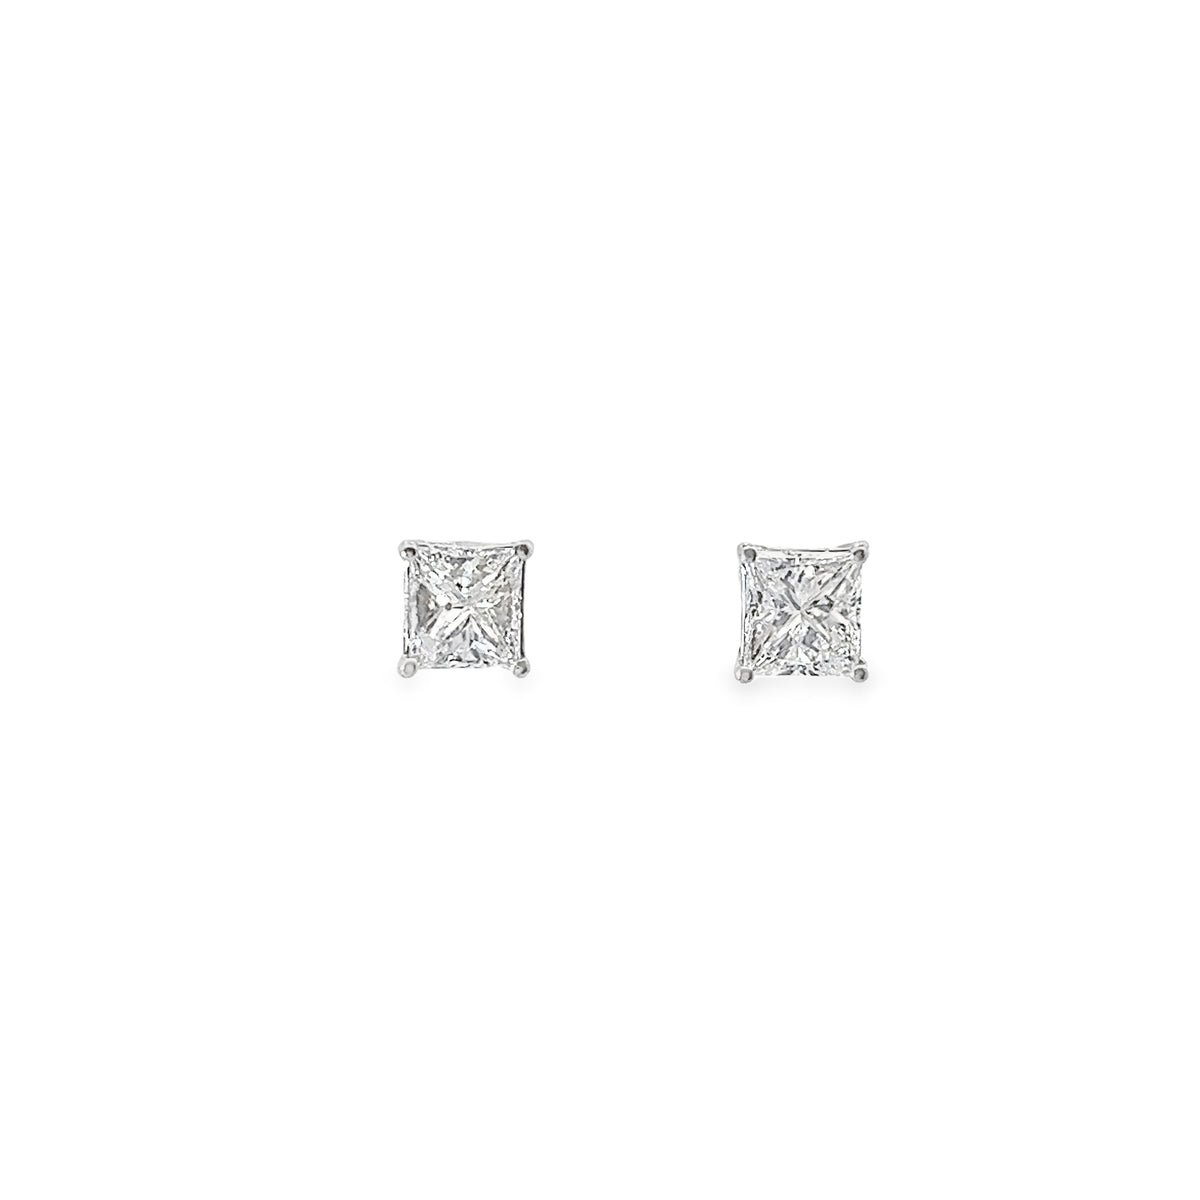 Ladies 14k white gold Princess Cut Diamond Stud earrings